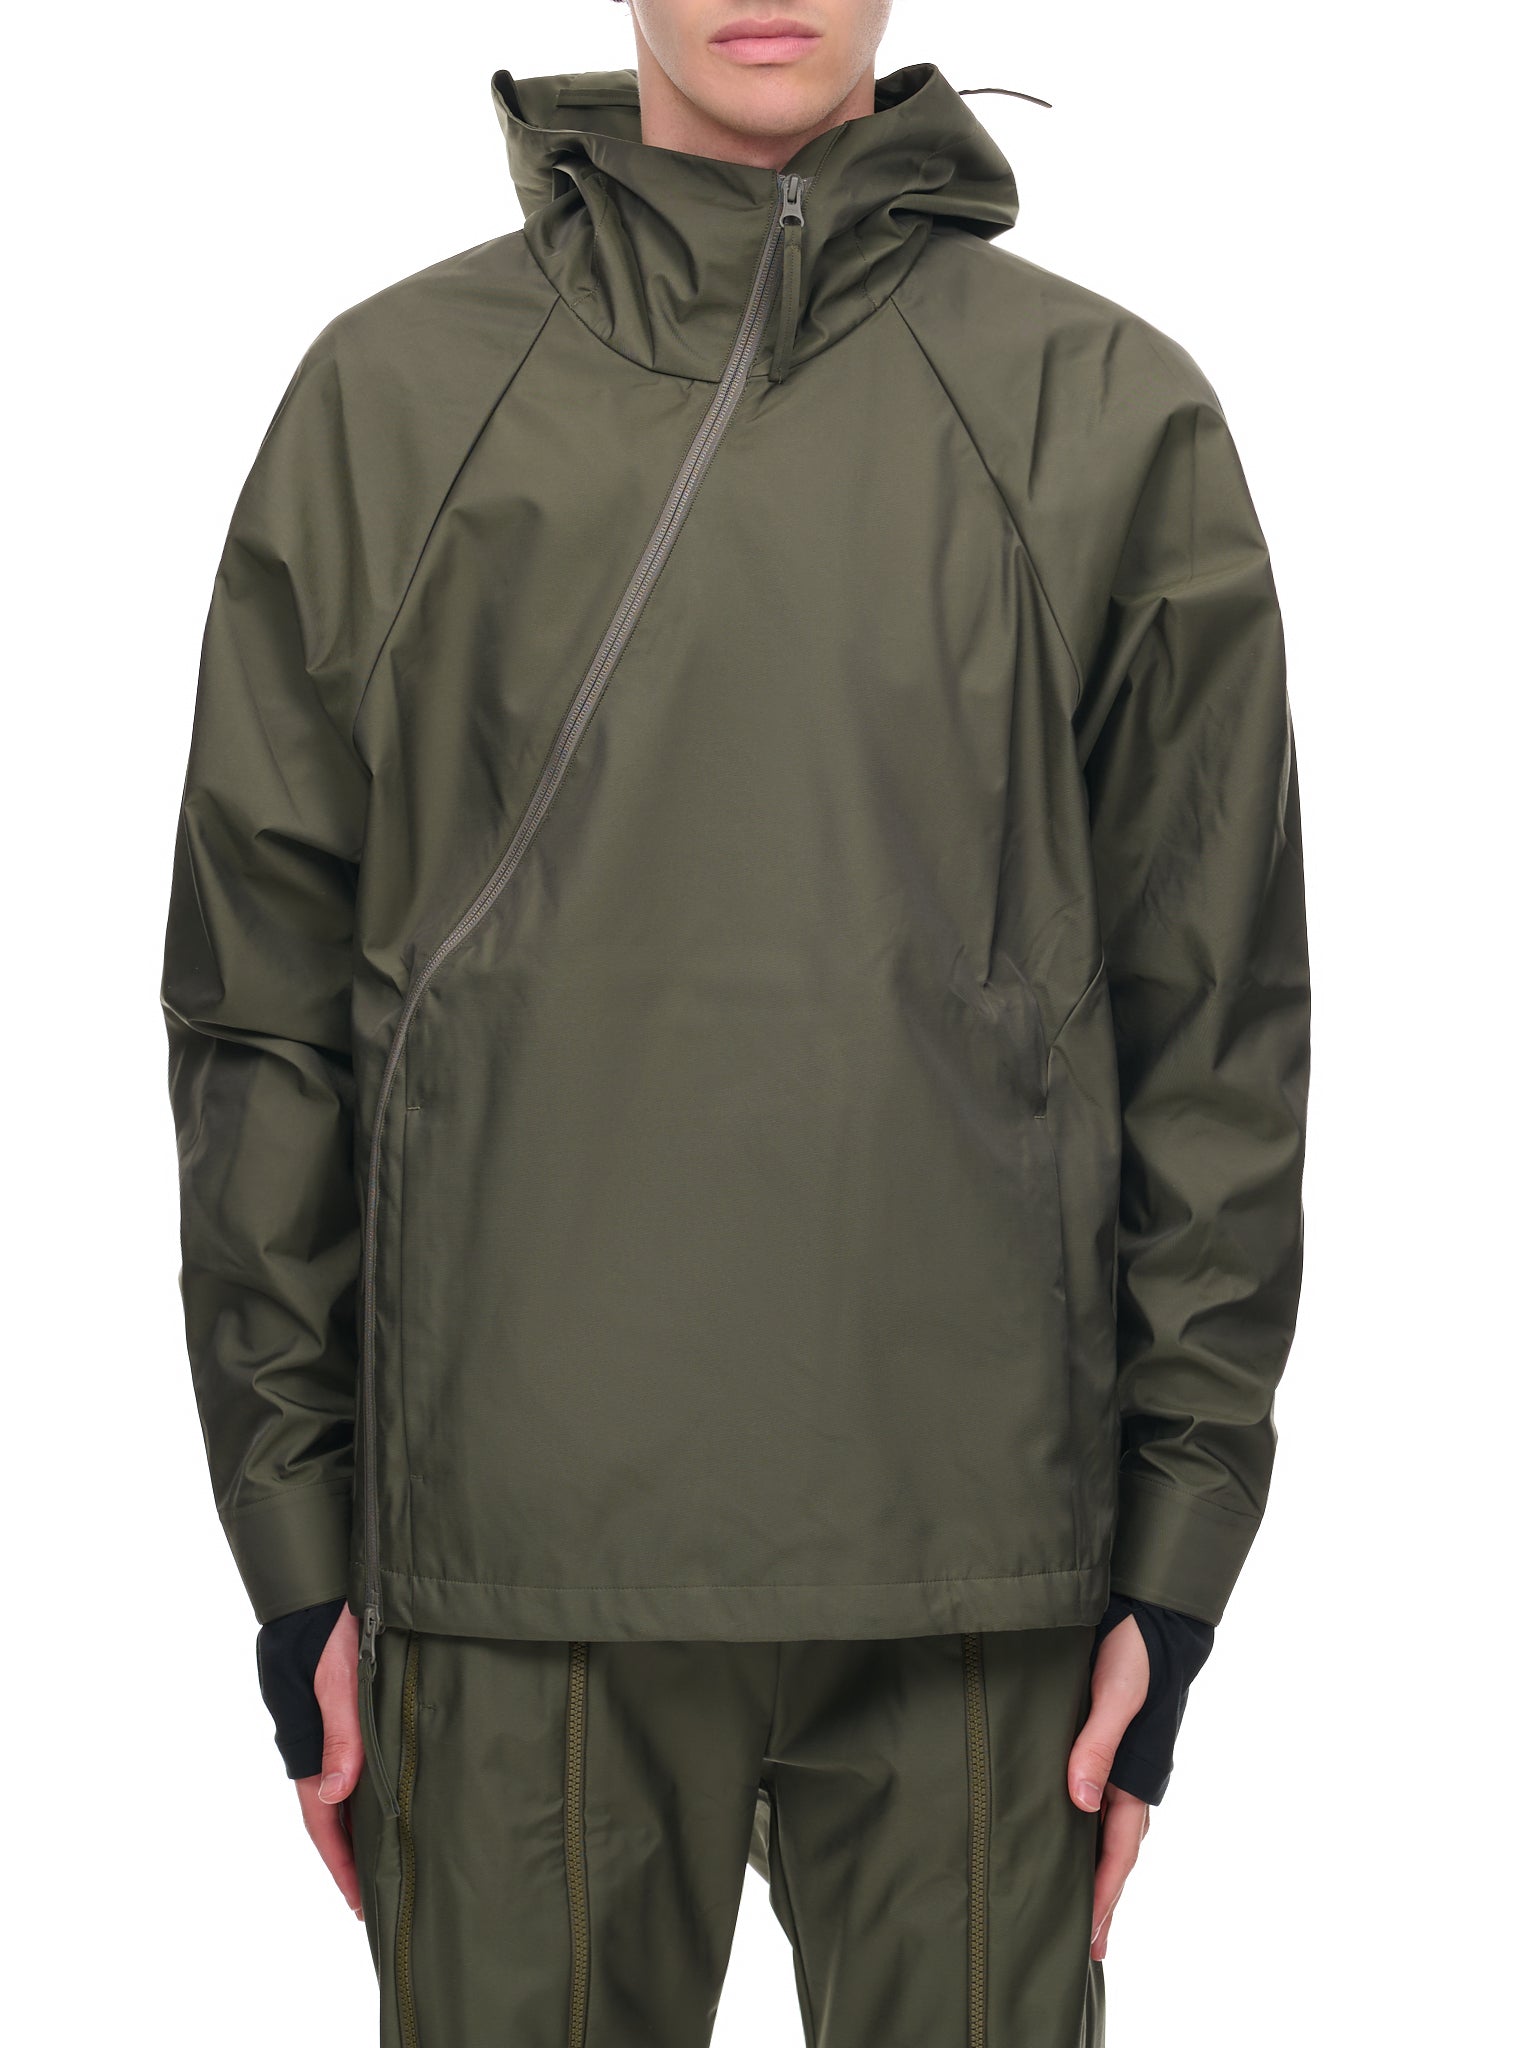 5.0 Center Technical Jacket (5-0-TECH-OLIVE-GREEN)